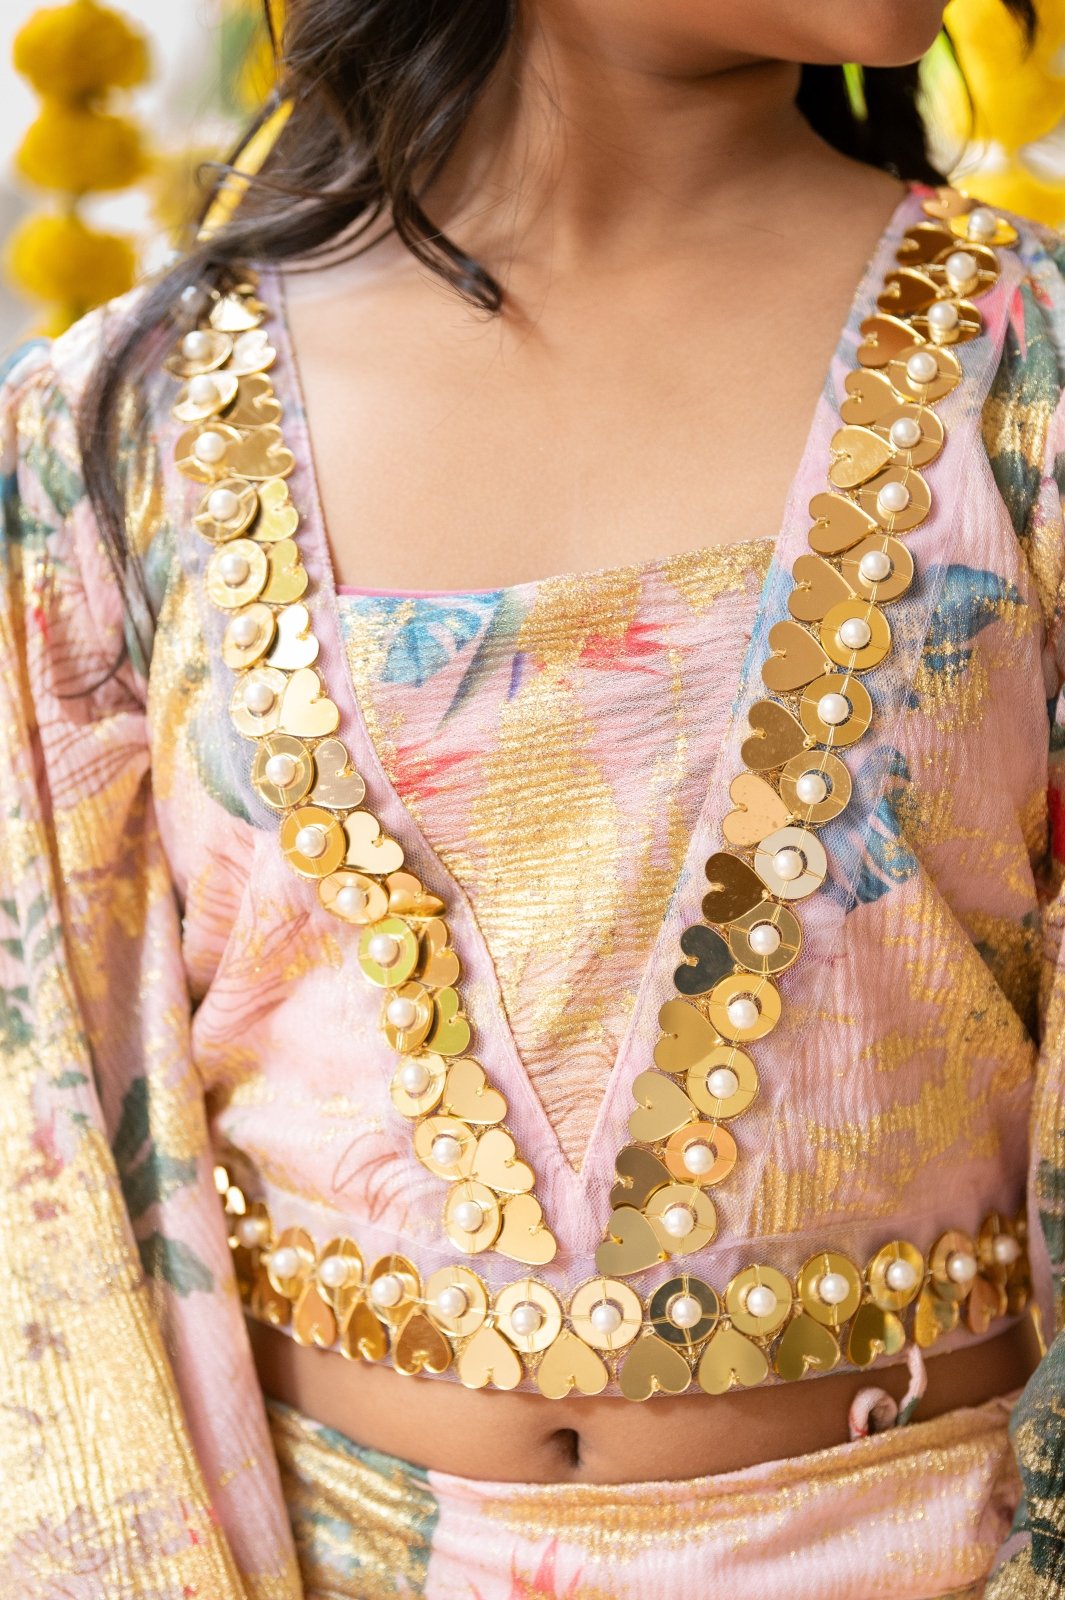 Heart Shaped Mirror Embellished Top With Floral print Lehenga - Kirti Agarwal